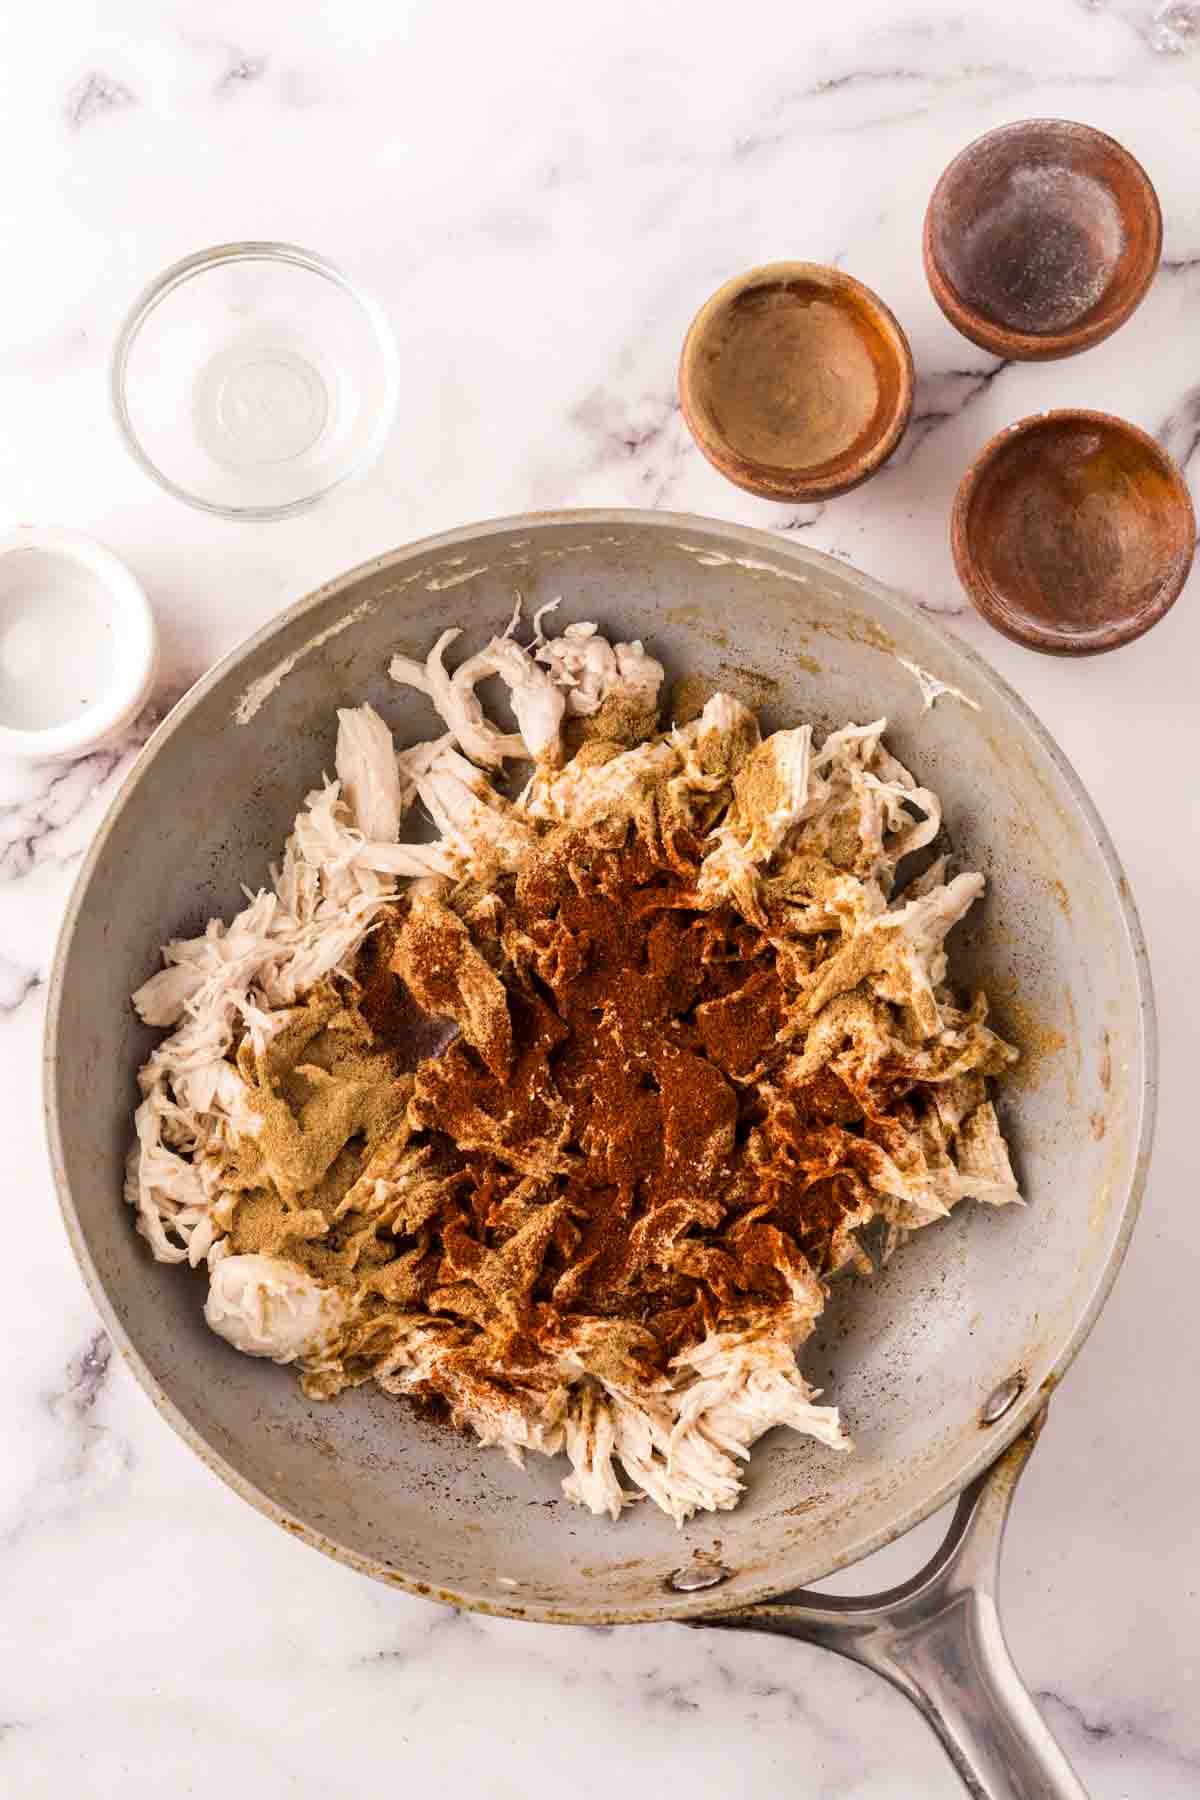 shredded chicken and seasonings in a pan.